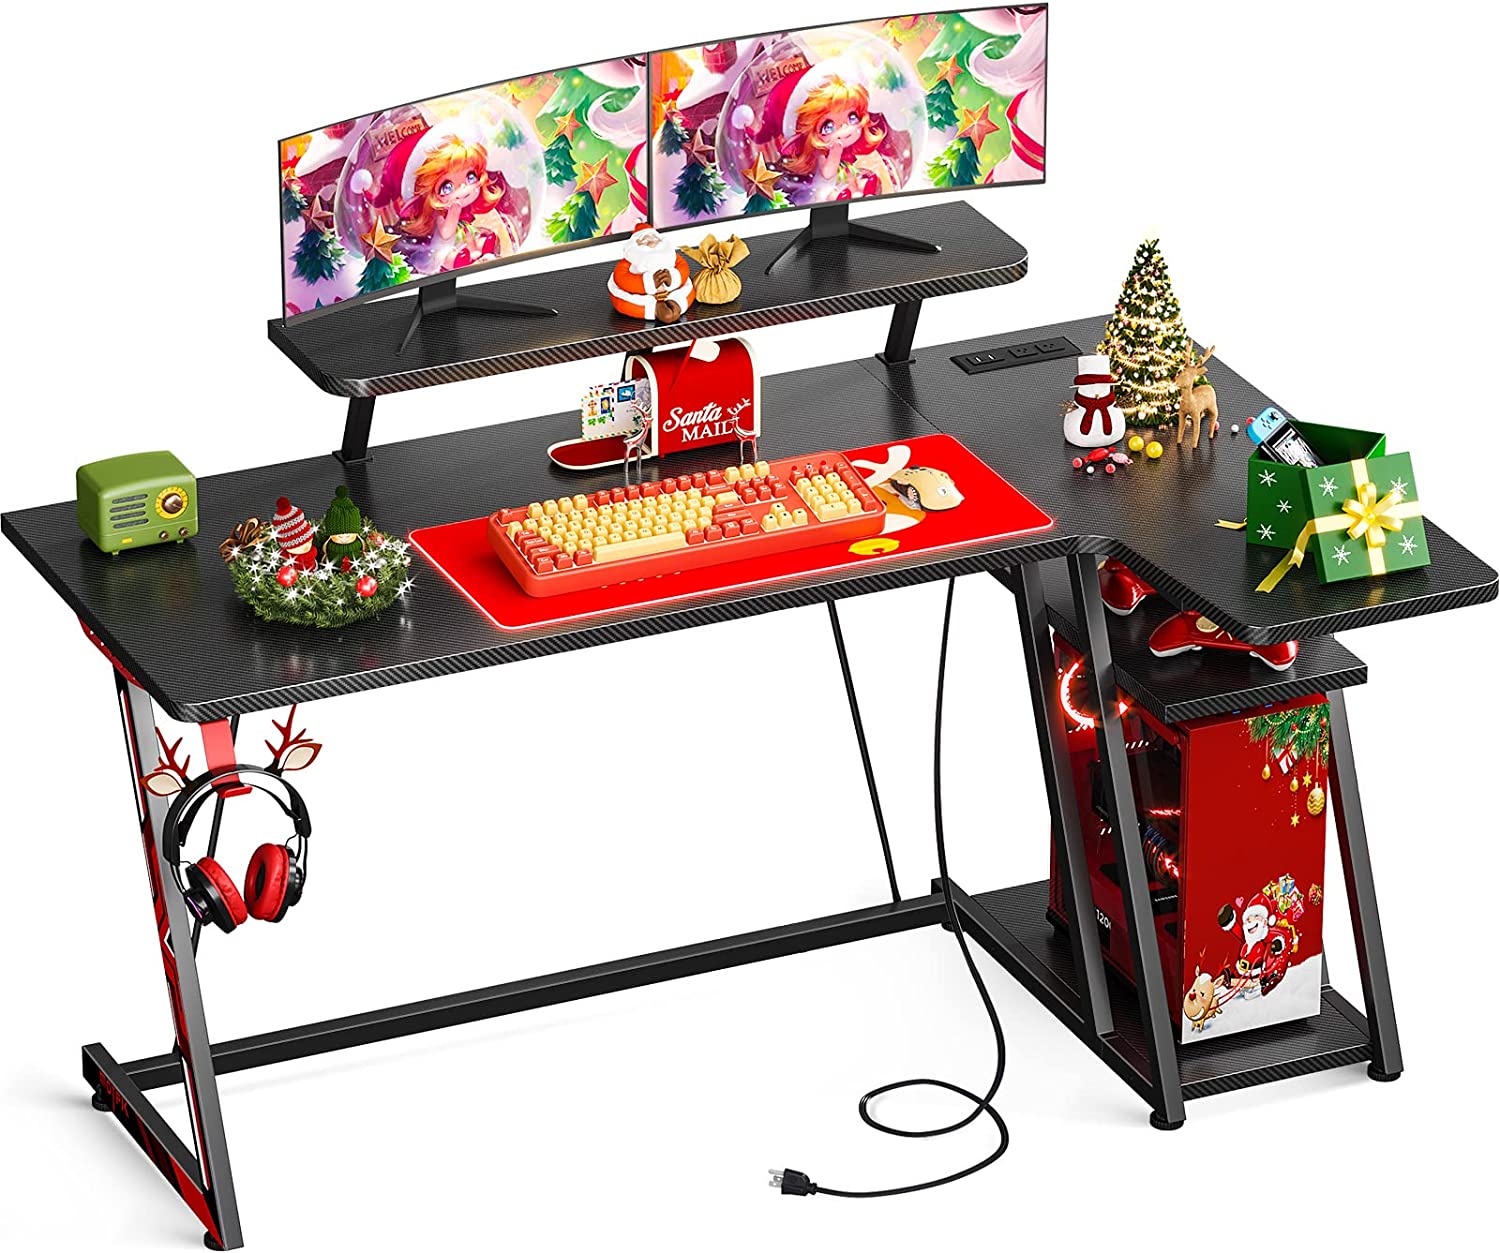 55 Inch L-Shaped Gaming Desk, Carbon Fiber Surface& Power Outlets